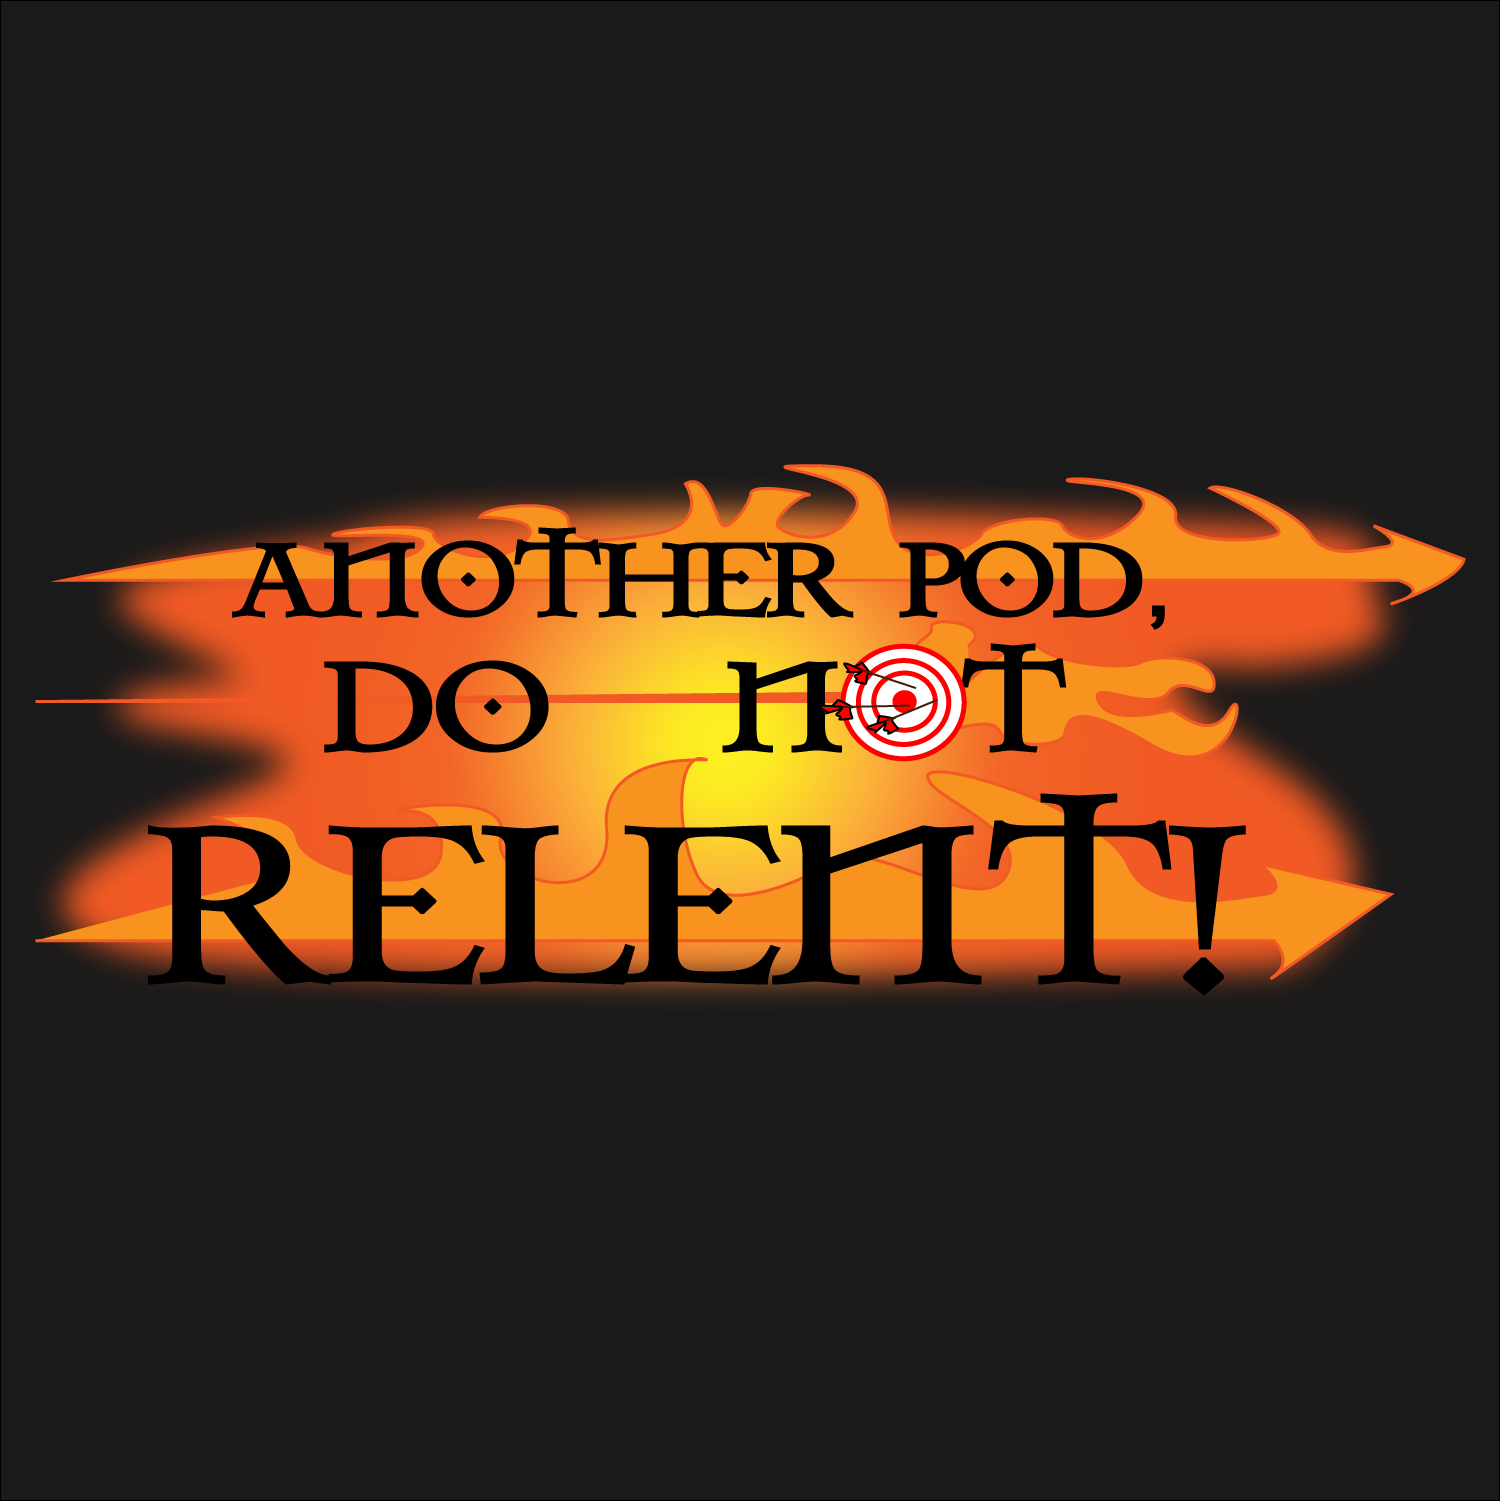 Another Pod: Do Not Relent!